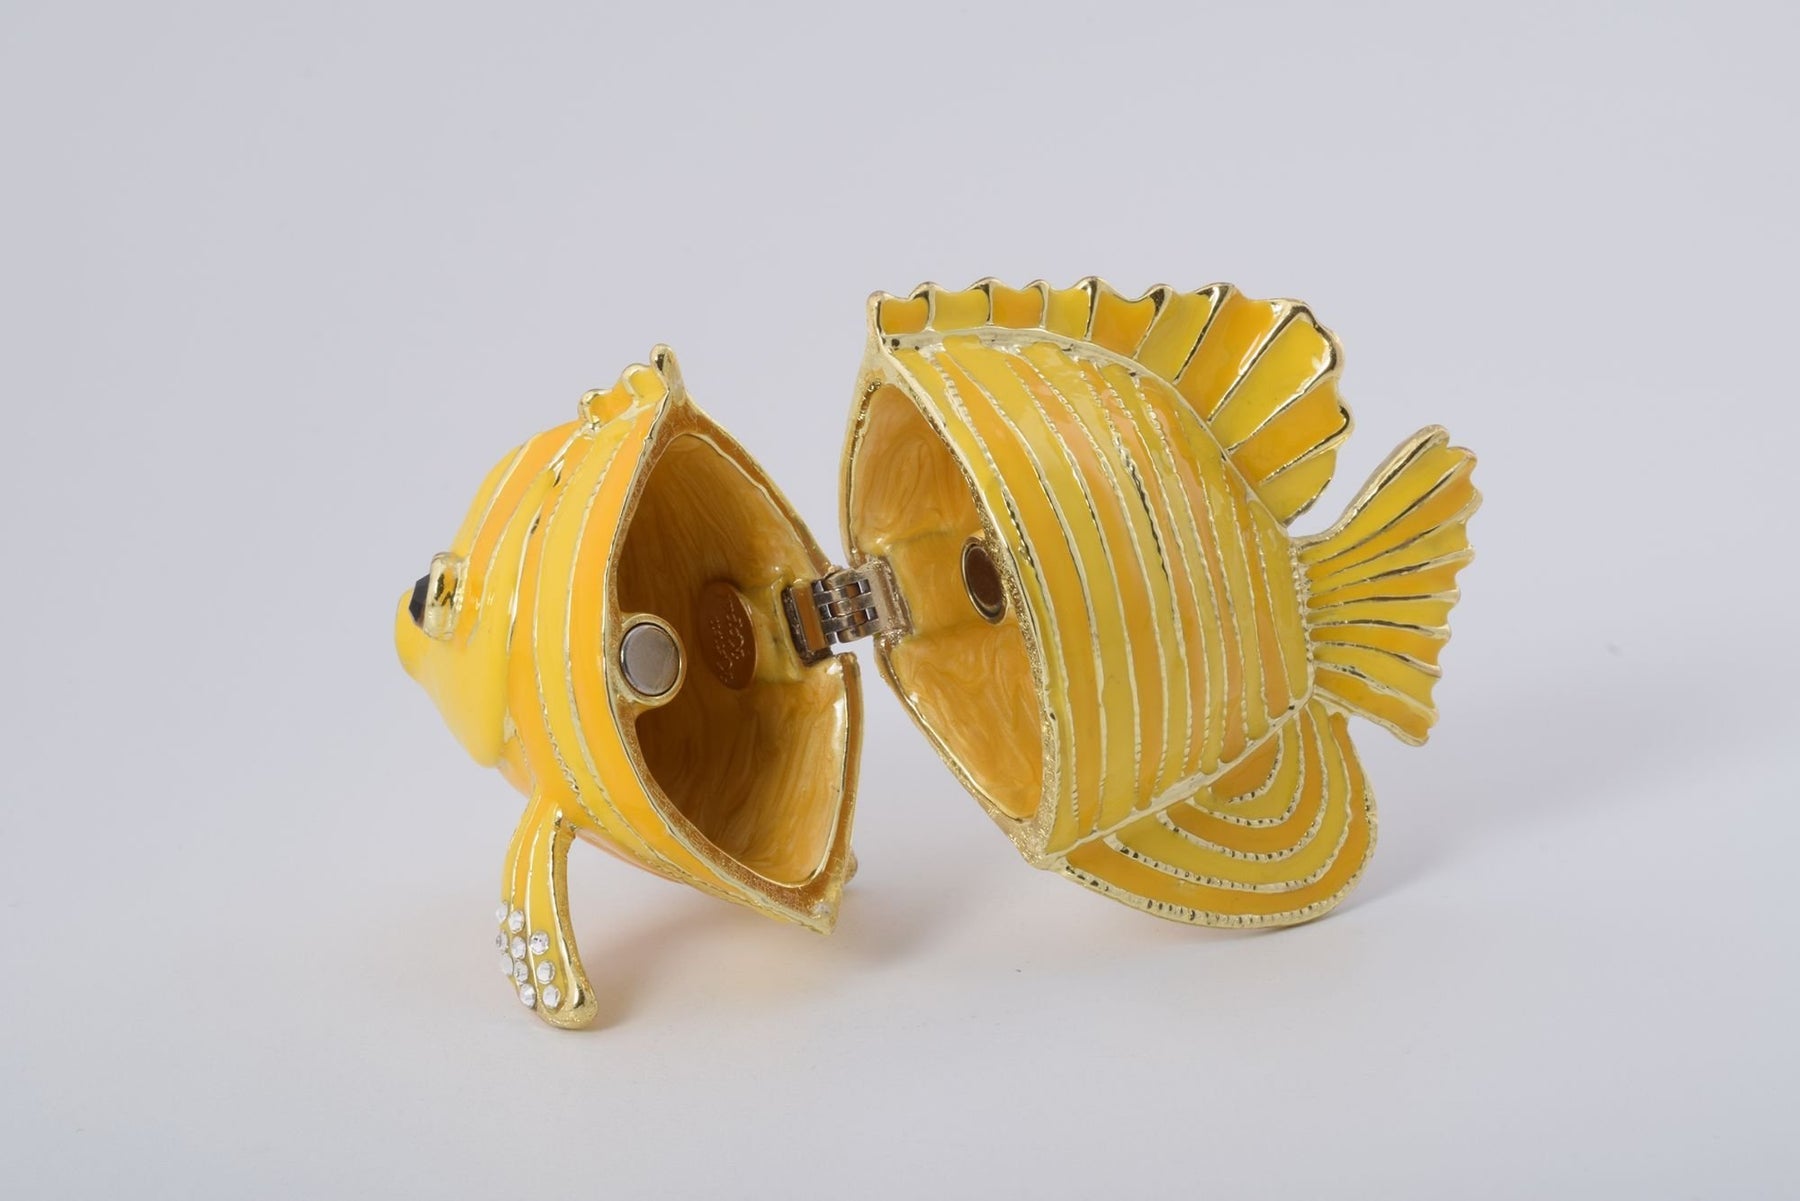 Keren Kopal Yellow Fish  56.75